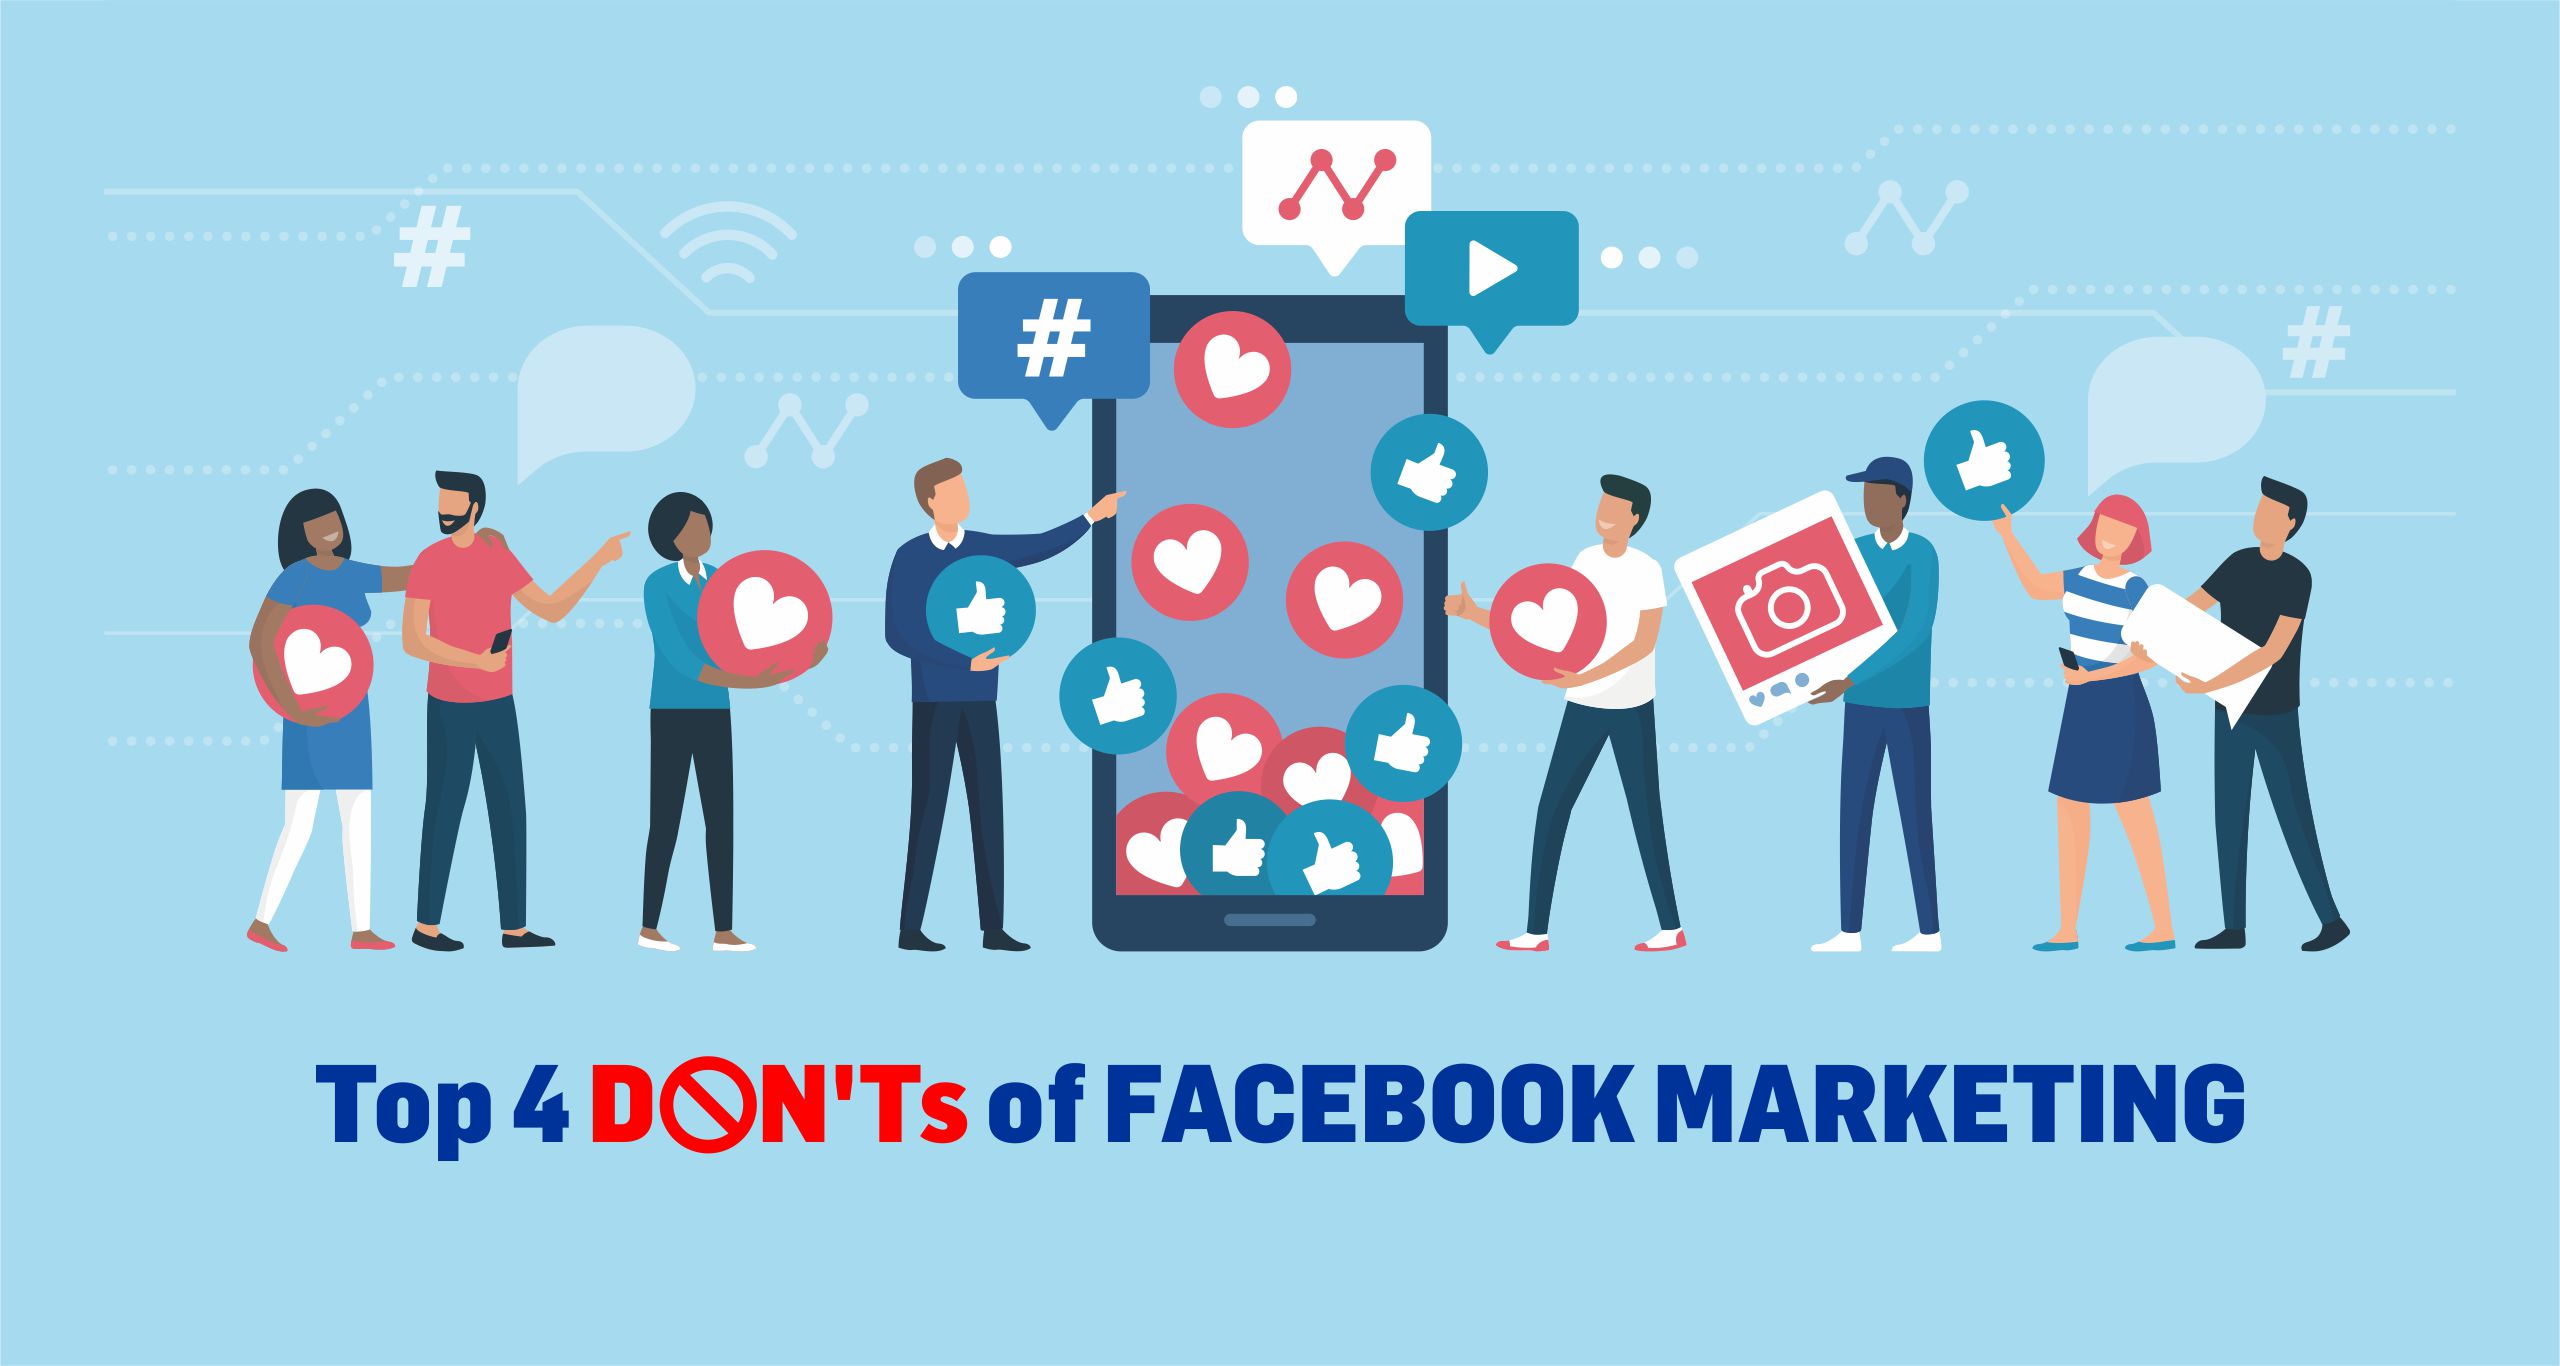 Top 4 DON'Ts of Facebook Marketing